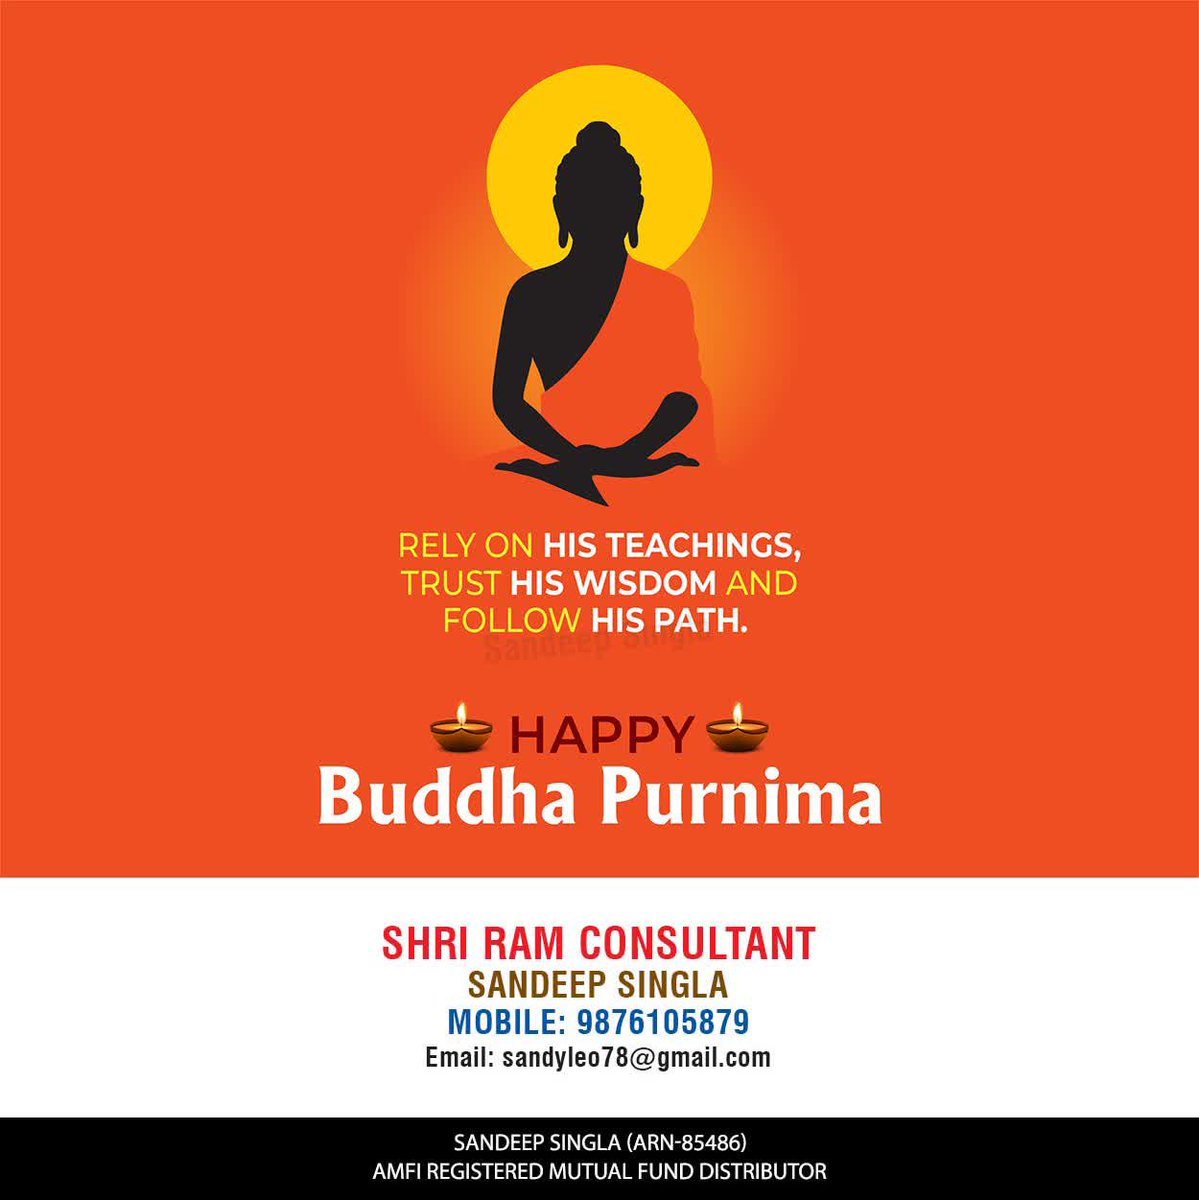 Happy Buddha Purnima

#festiveseason #SIP #mutualfunds #NJ #NJWealth #NJGroup #BuiltOnTrust